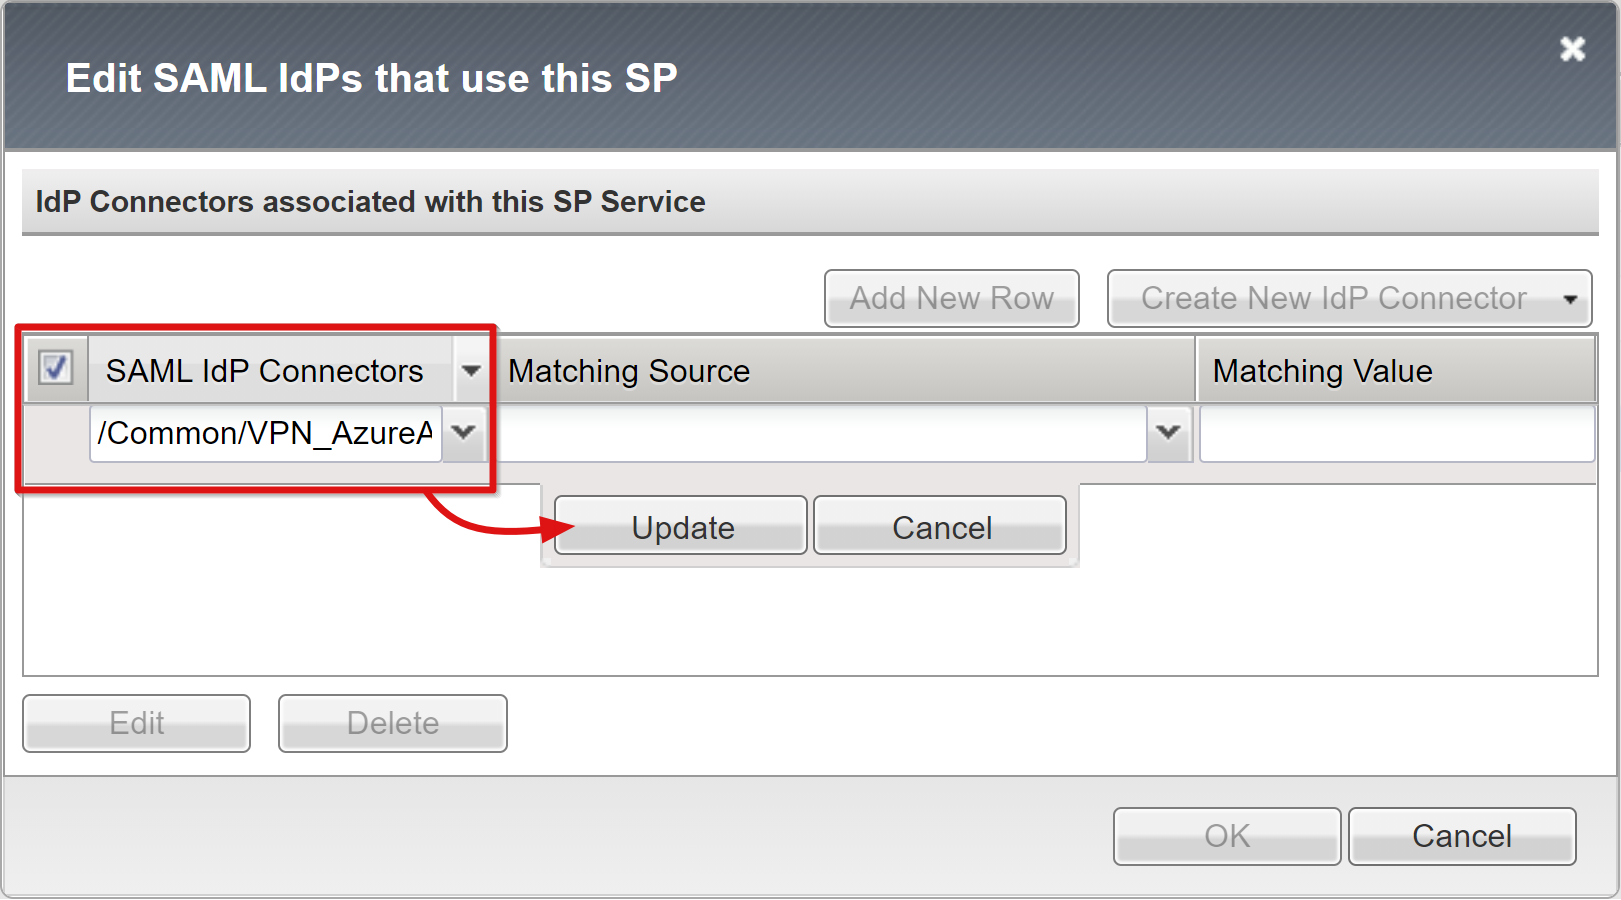 Screenshot of SAML IdP Connectors option on the Edit SAML IdP page.